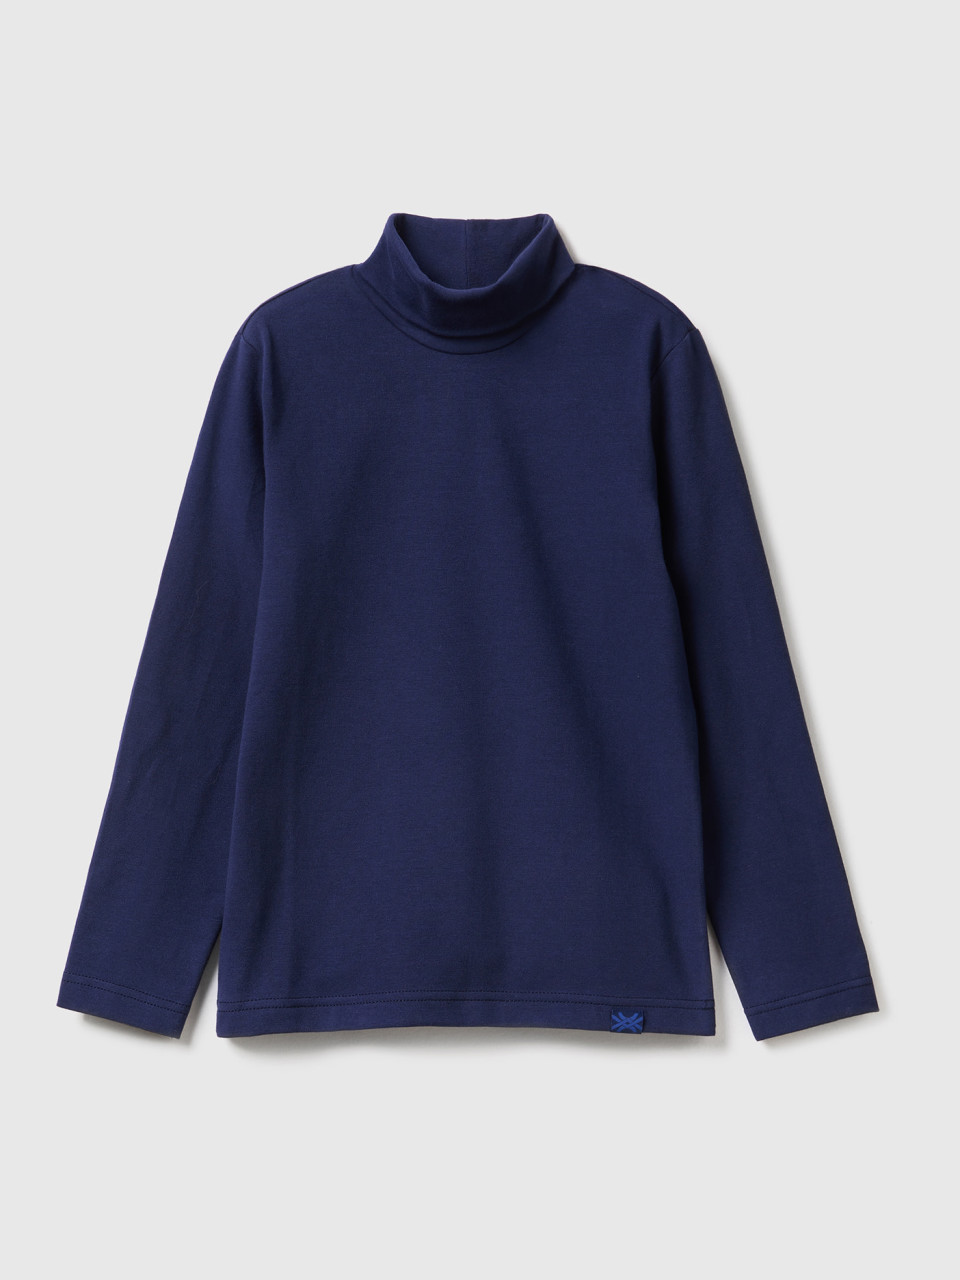 Benetton, Long Sleeve Turtleneck T-shirt, Dark Blue, Kids